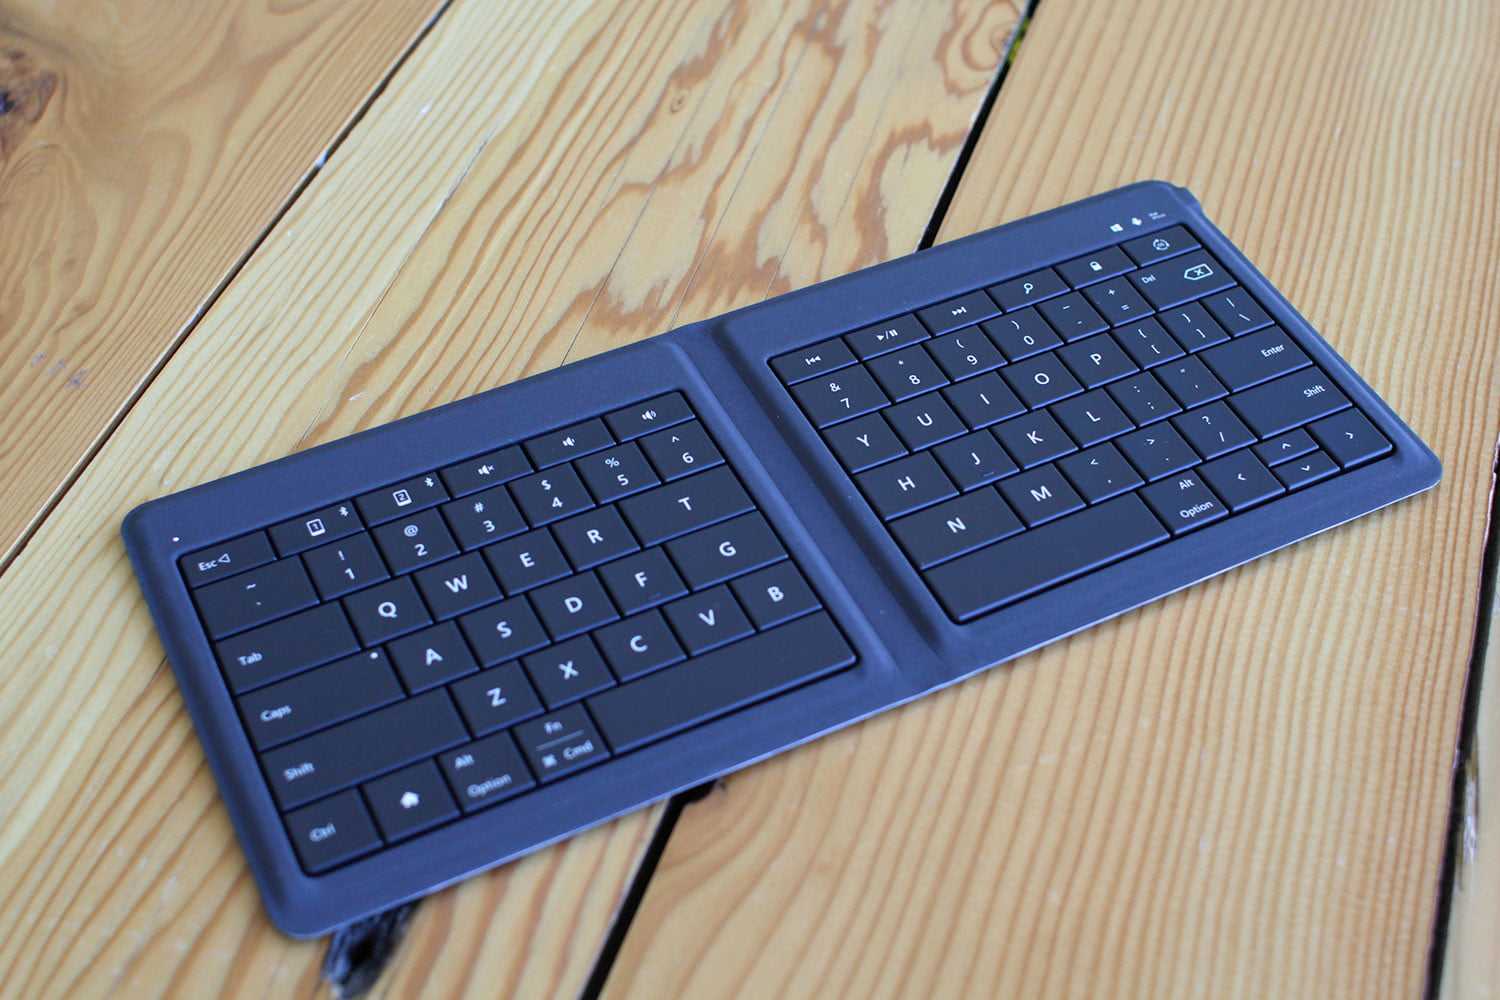 Тест и обзор: microsoft universal foldable keyboard – складная беспроводная клавиатура